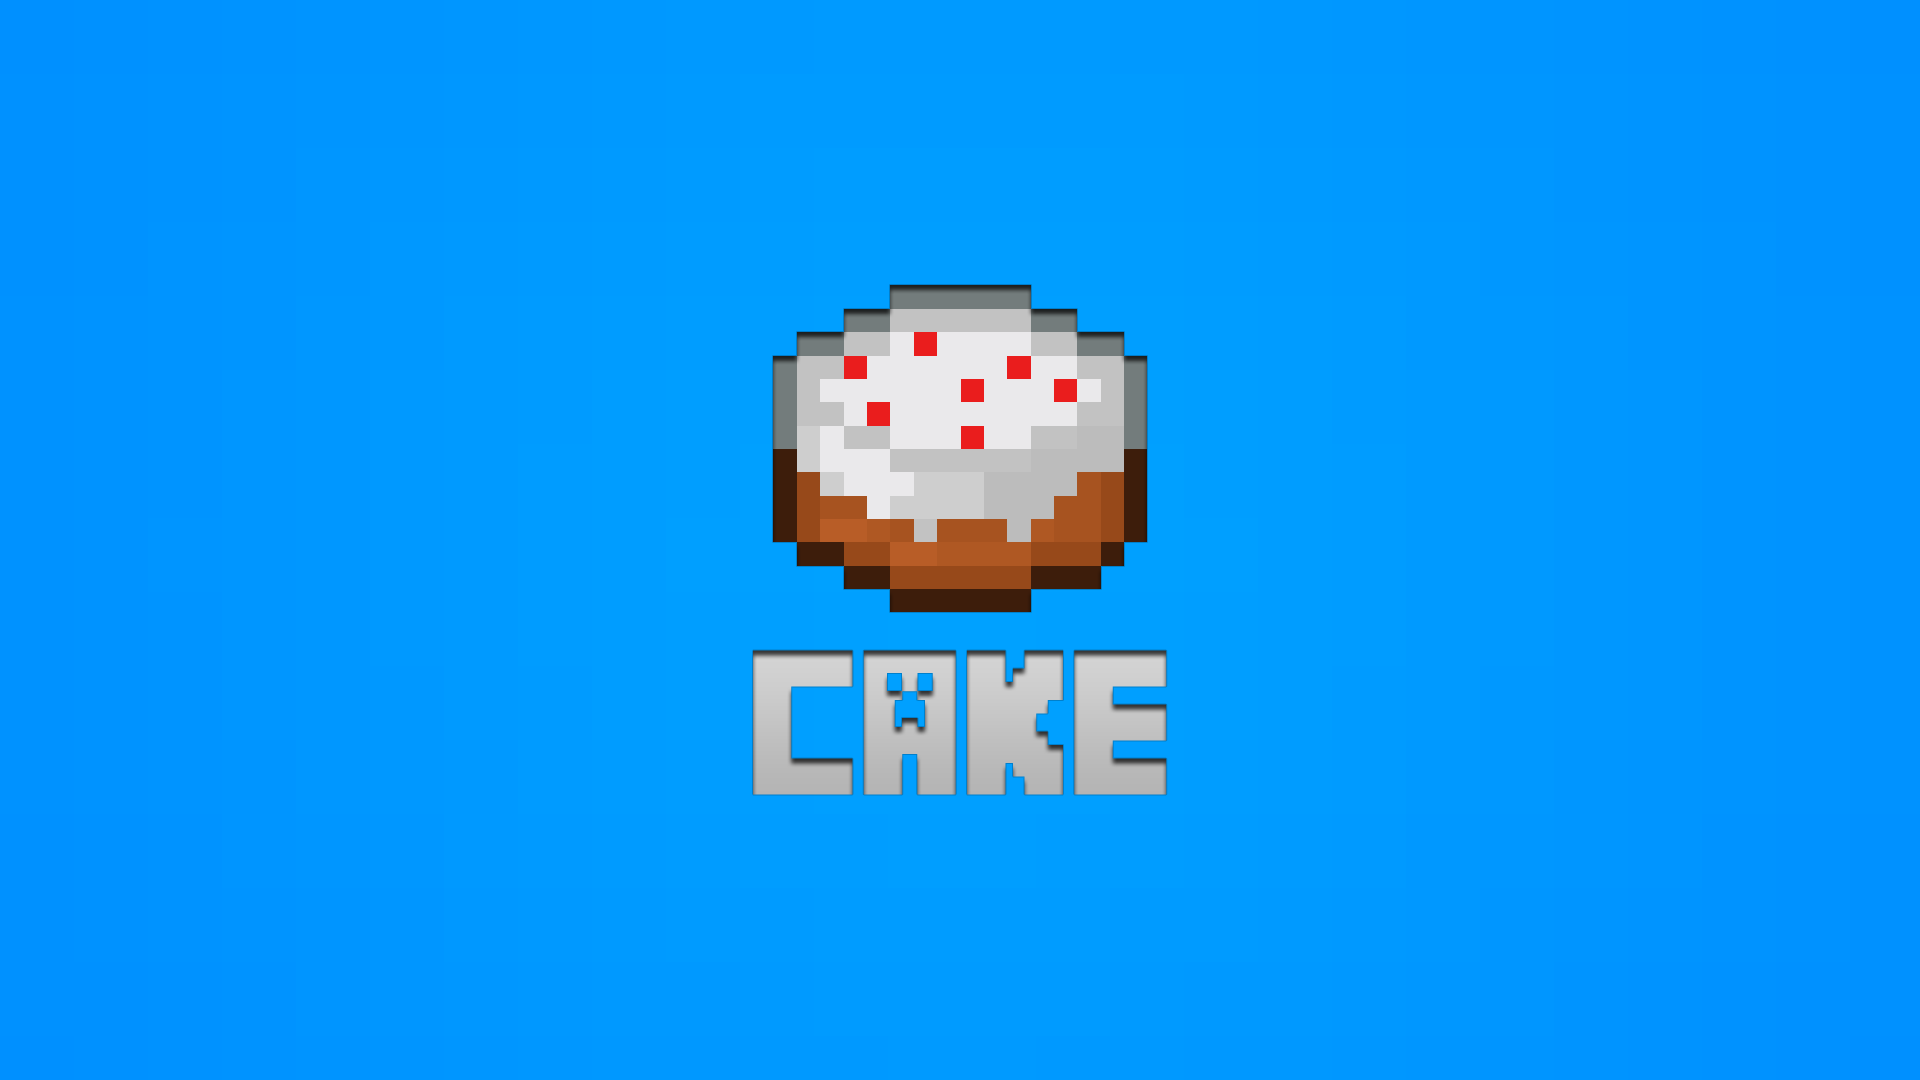 Free download 1080p Simplistic Minecraft Wallpaper Cake pikdit